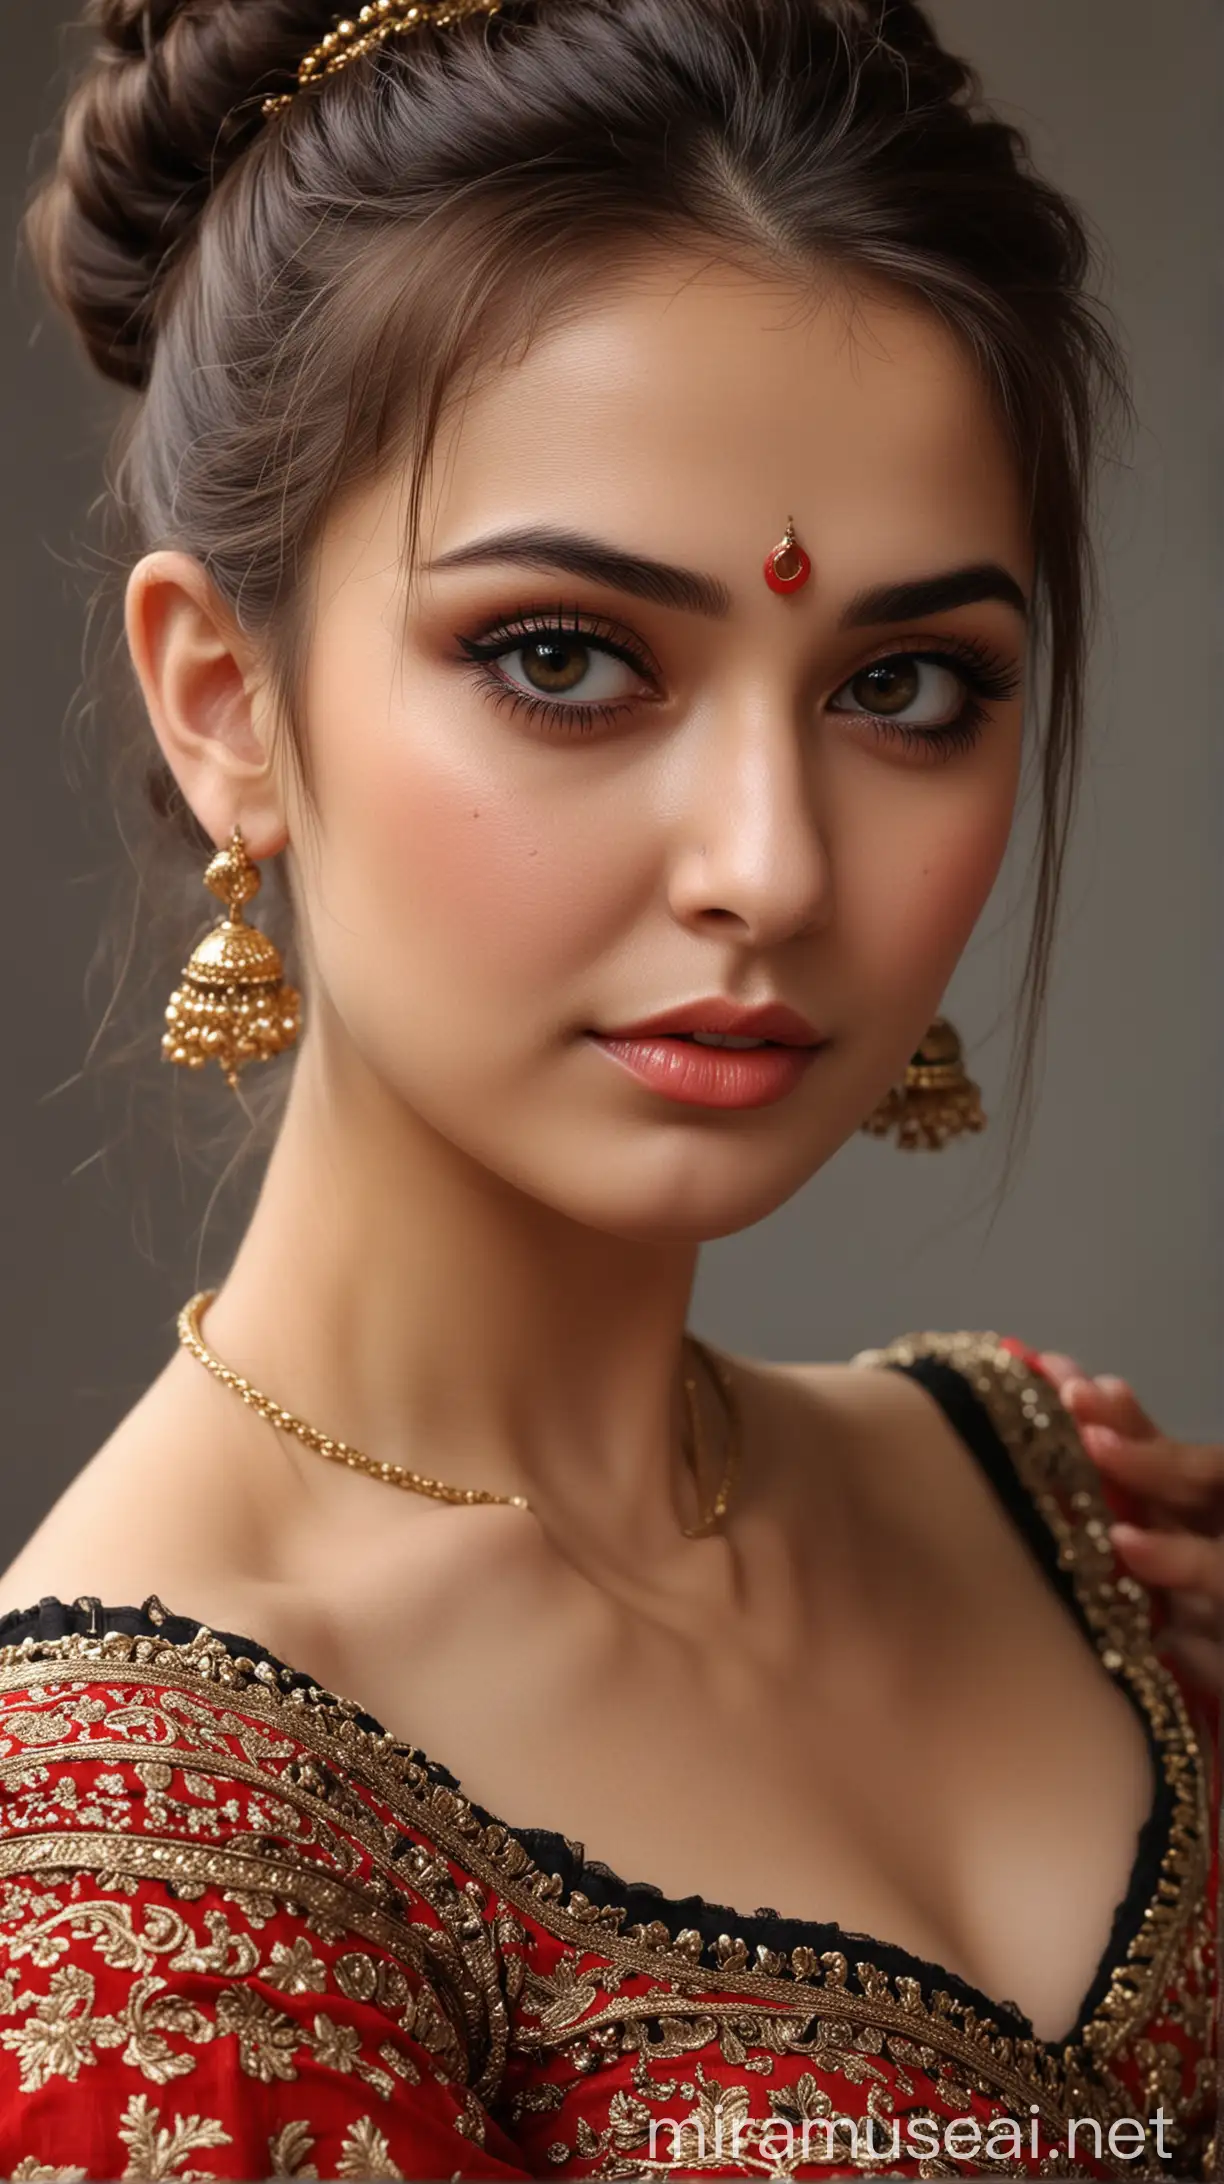 Russian beautiful girl,,extreme cute face,,Indian makeup,,bun hair style,,ultra 4k realistic photography,,medium shots photo,,bra